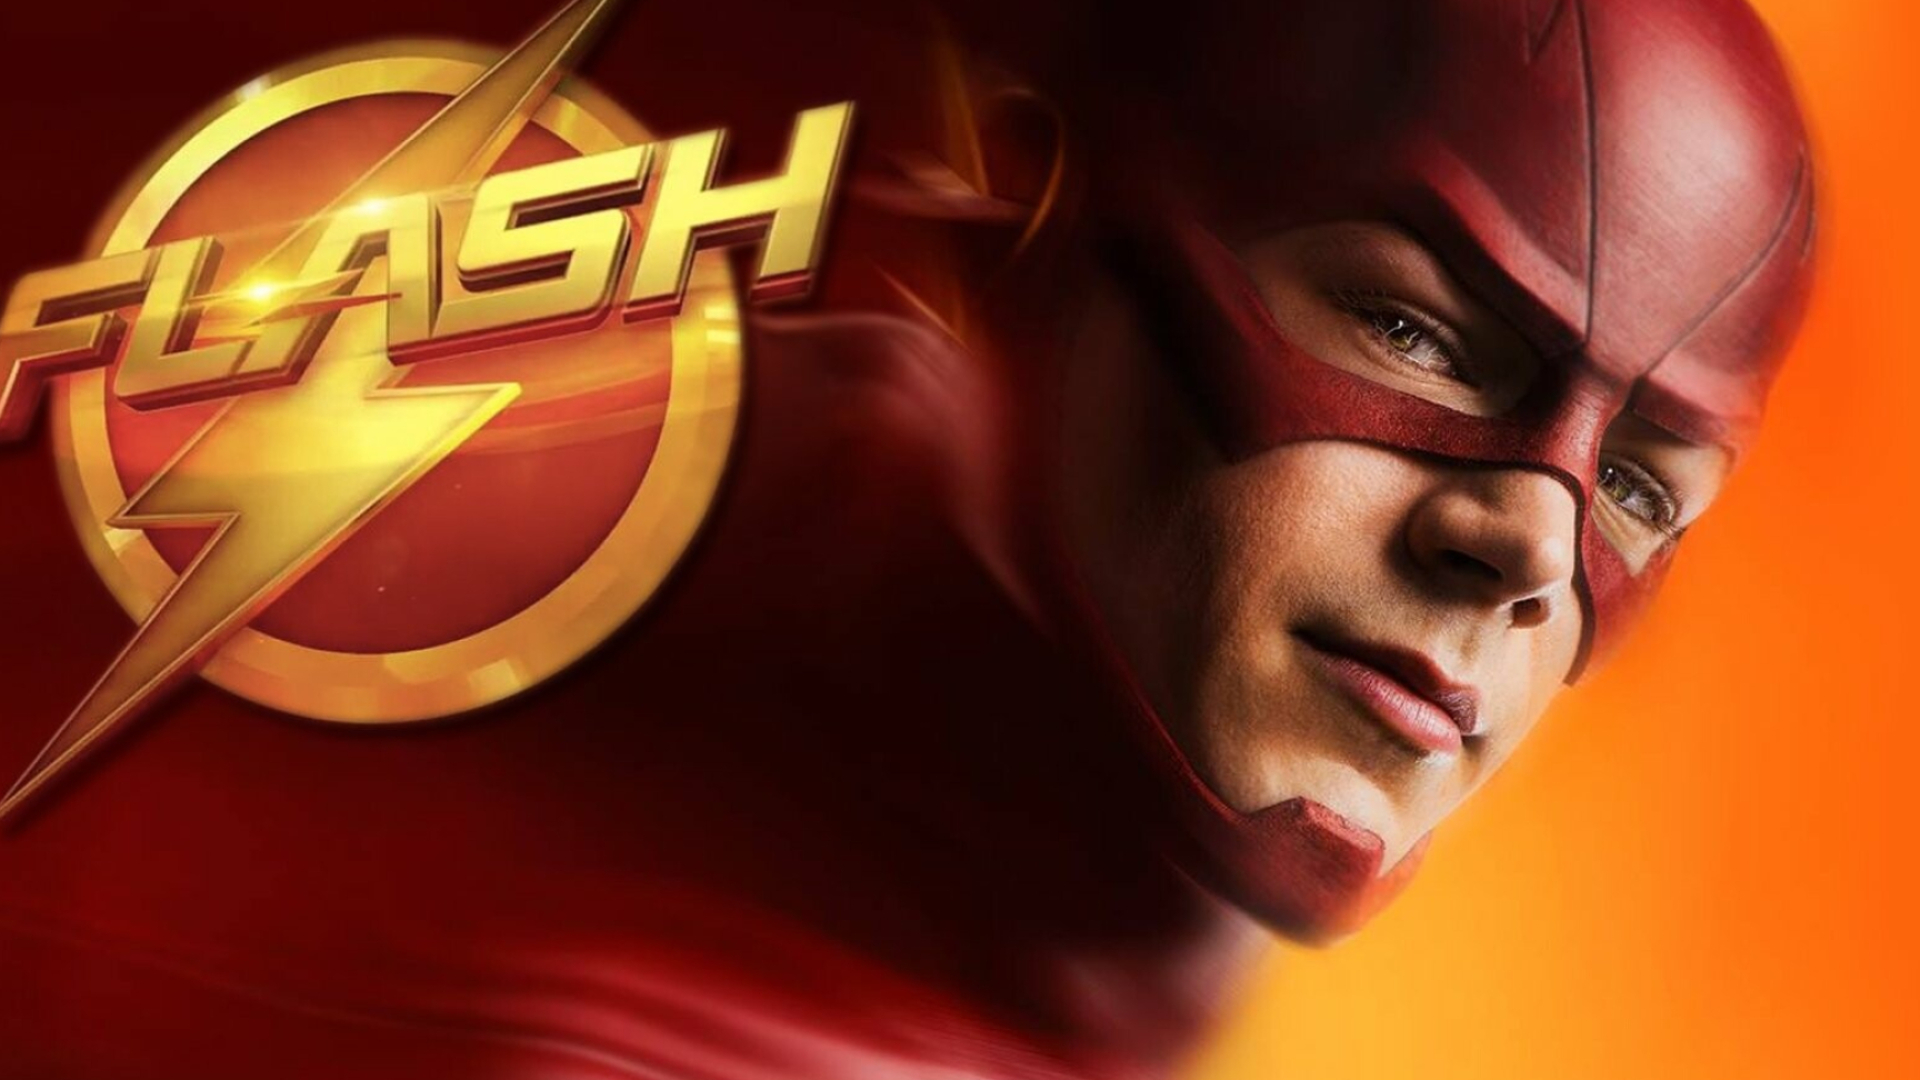 Flash (DC): An American superhero television series, Developed by Greg Berlanti, Andrew Kreisberg, and Geoff Johns, 2014. 1920x1080 Full HD Background.